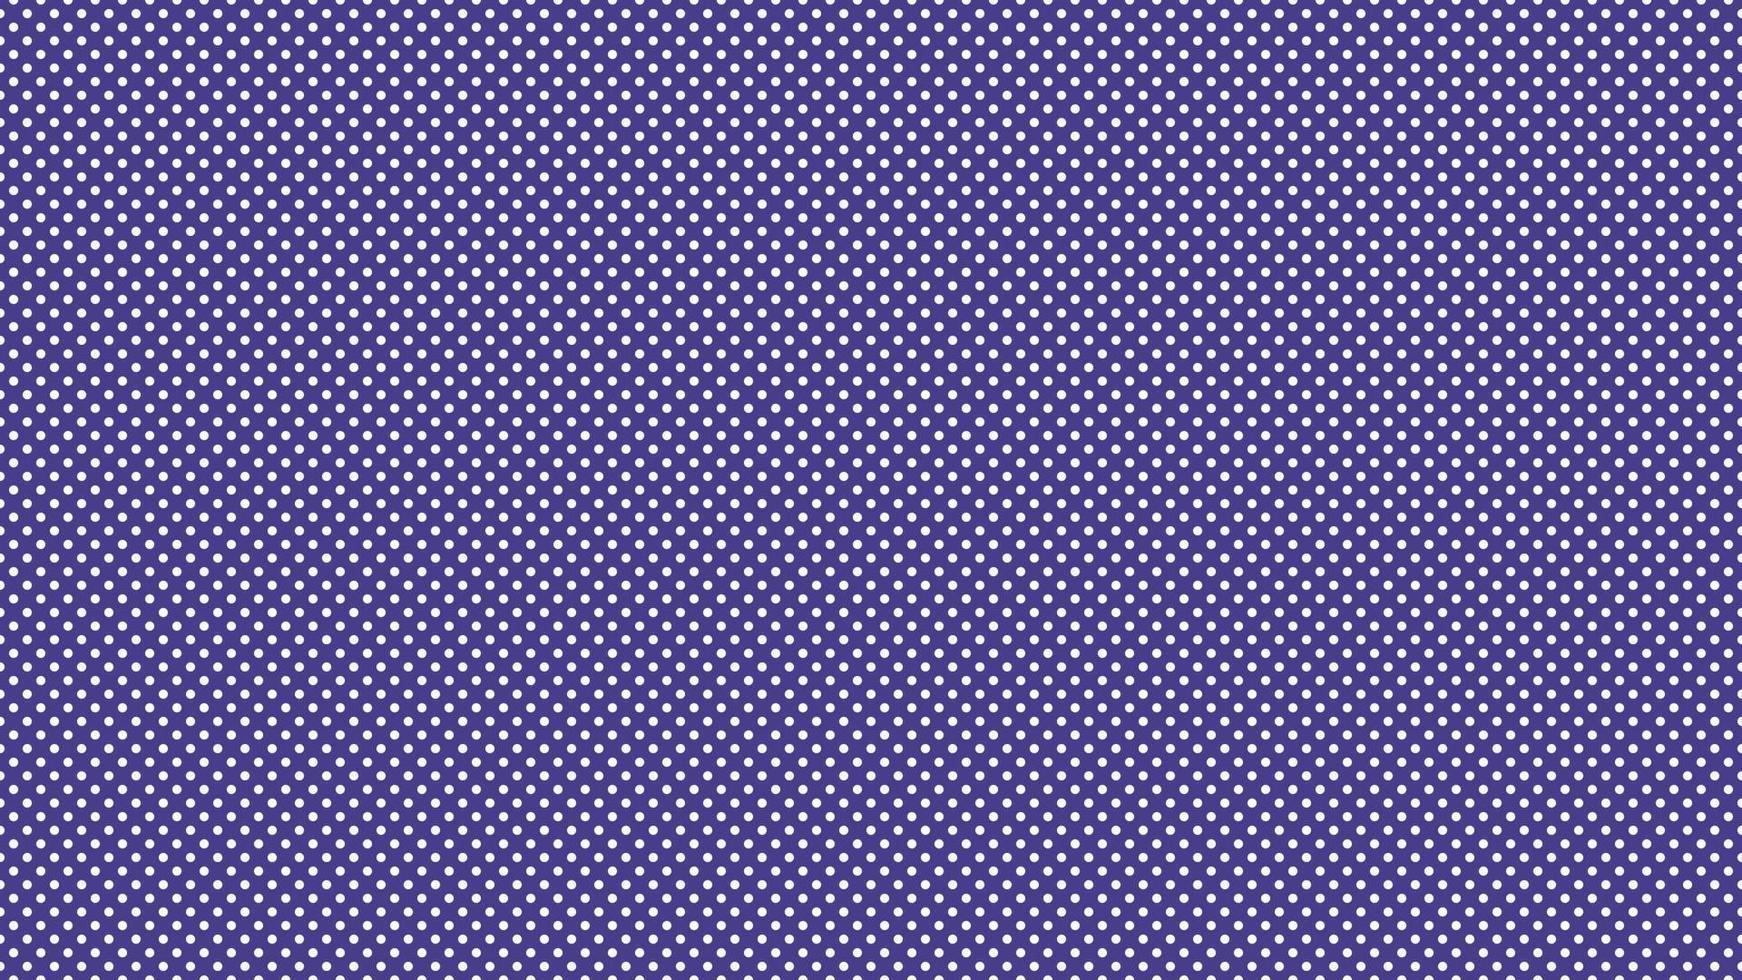 wit kleur polka dots over- donker leisteen blauw Purper achtergrond vector